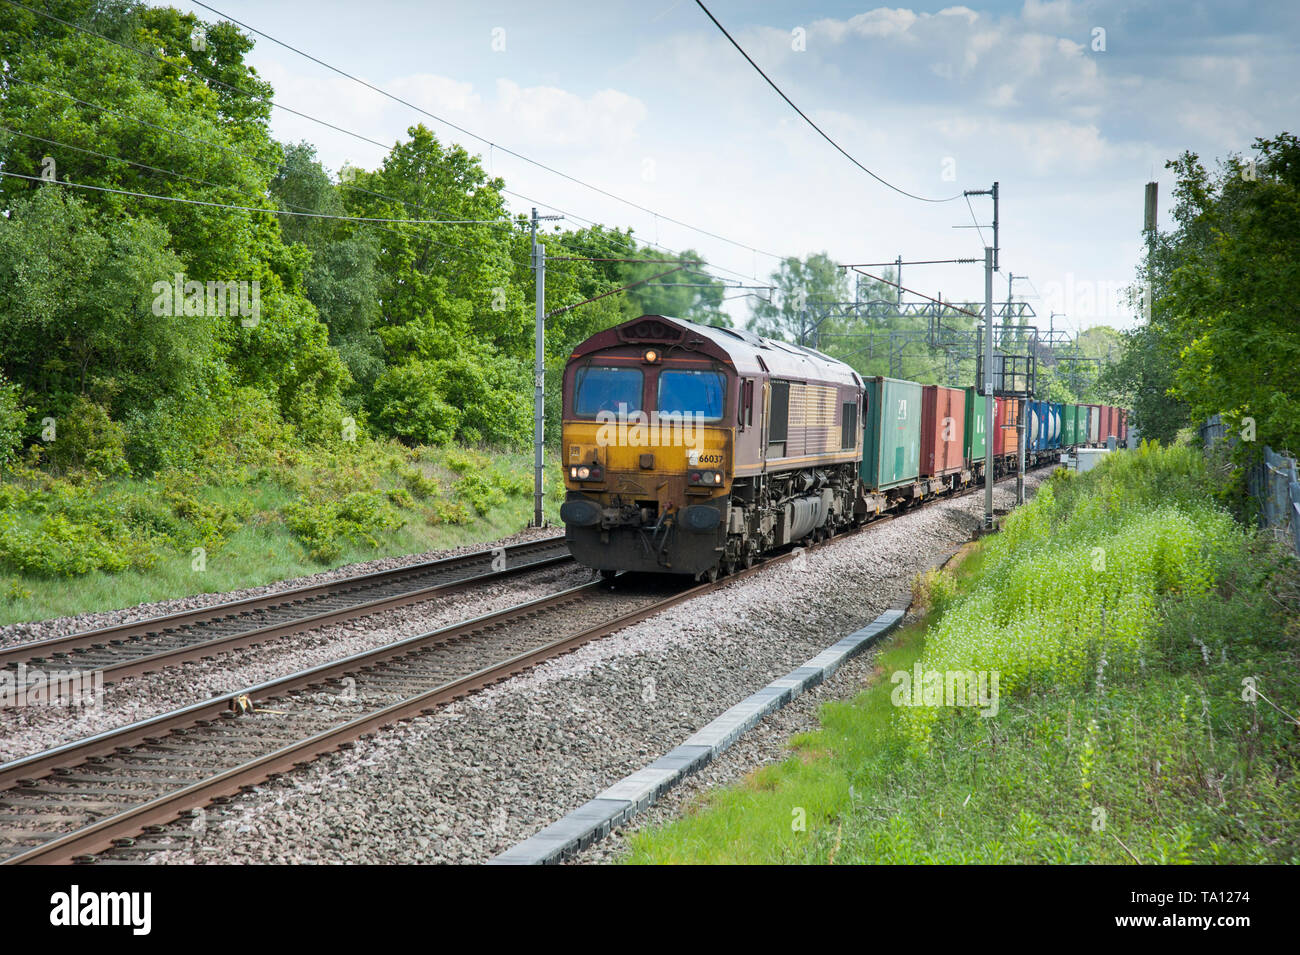 Class 66 diesel locomotive hauling a freight  train Stock Photo